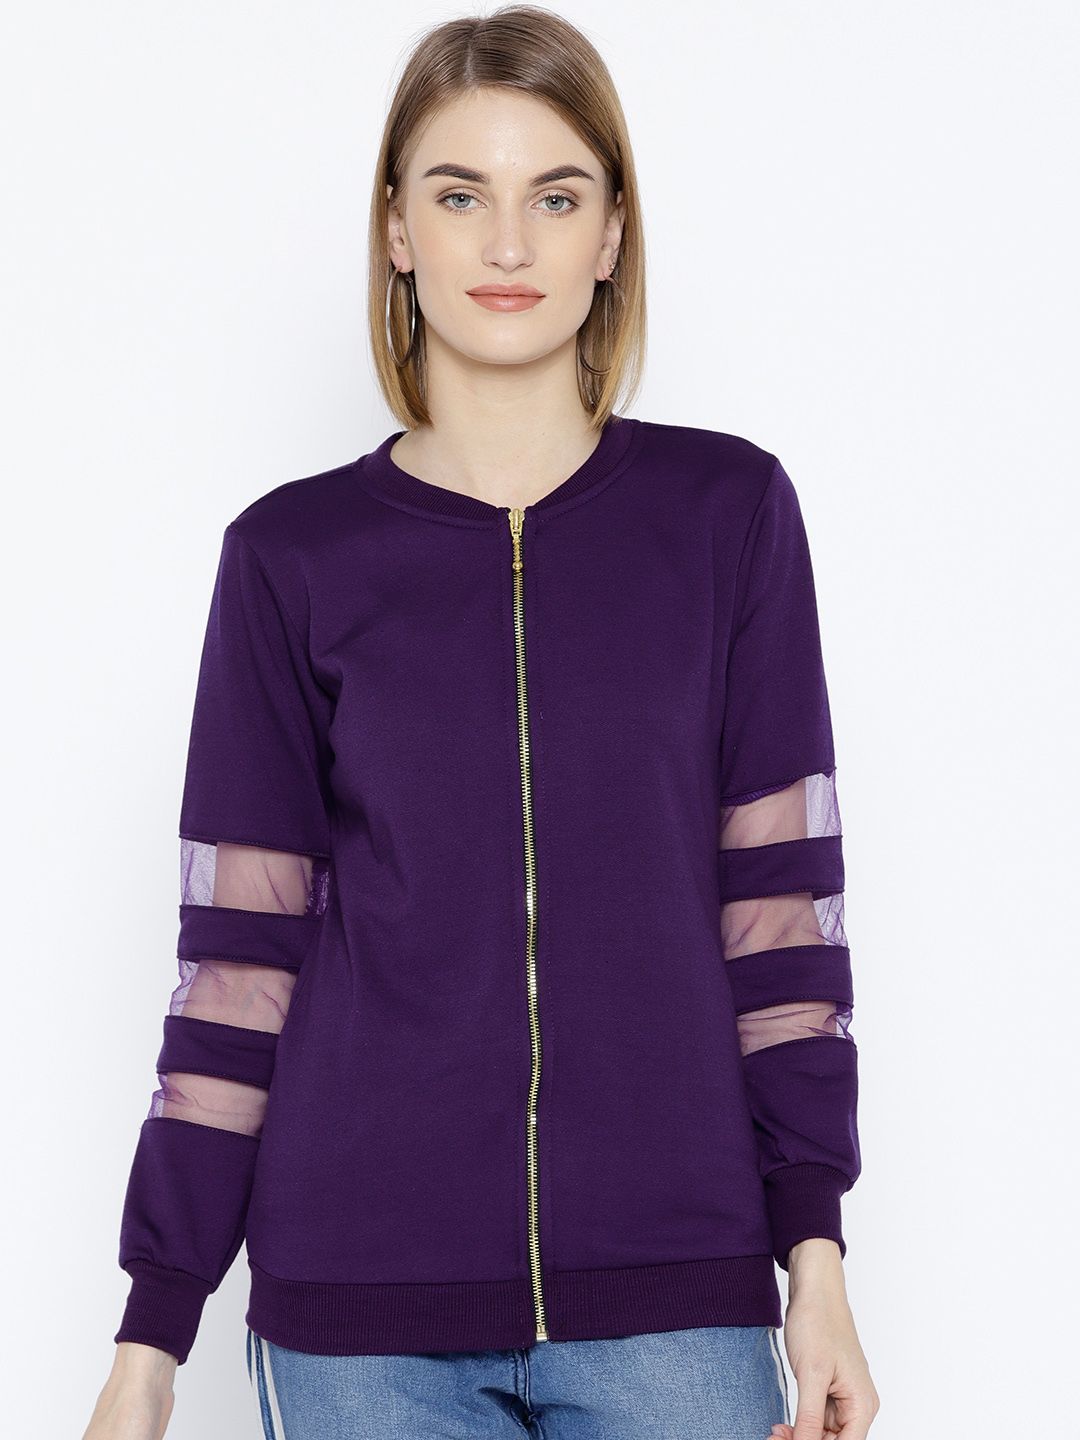 Belle Fille Women Purple Solid Sweatshirt Price in India